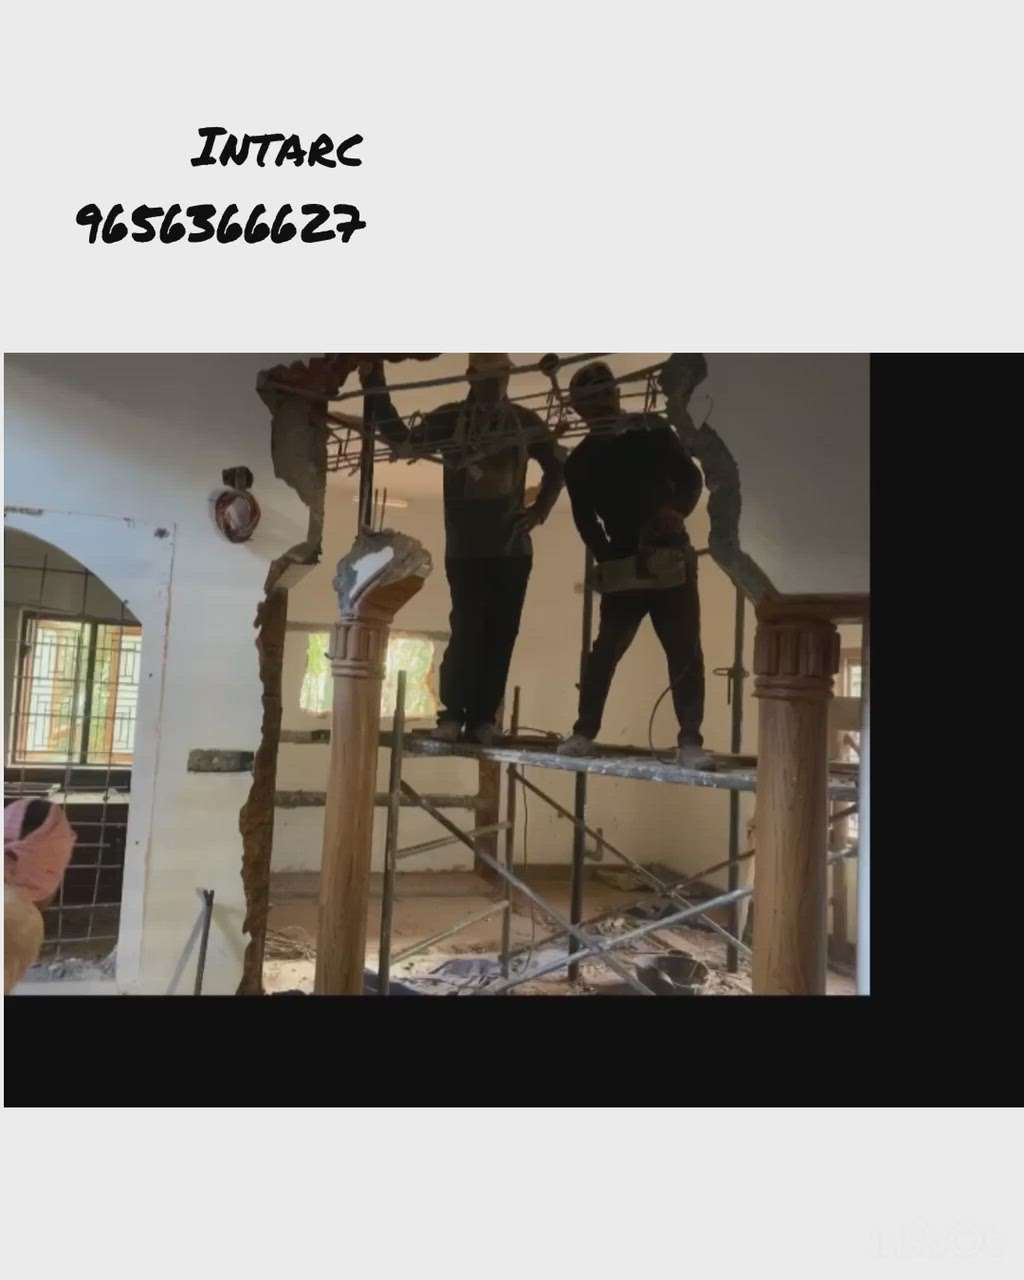 #Intarc Construction#
# Construction#
# Renovation#
# interior#
# kolo#
ചെറിയ ബഡ്ജറ്റിൽ കണ്ണൂർ ജില്ലയിൽ  എവിടെയും വീട് , ബിൽഡിംഗ് , renovation ഉൾപ്പെടെ പ്ലാൻ, ഡിസൈനിങ് , കൺസ്ട്രക്ഷൻ 
ph:9656366627,9747446520